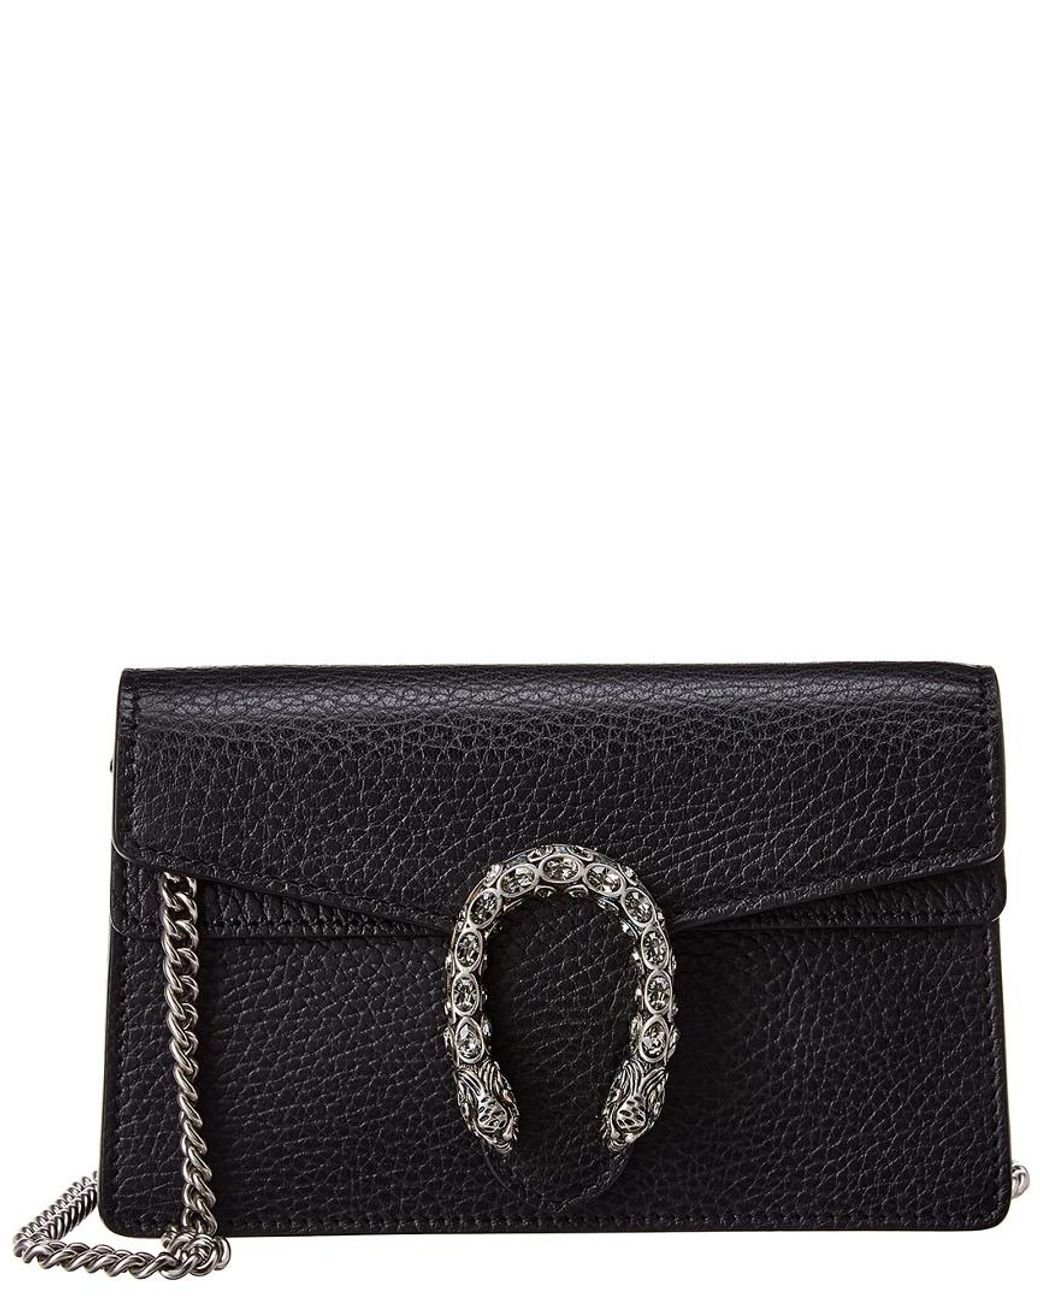 Gucci Dionysus Super Mini Leather Shoulder Bag in Black